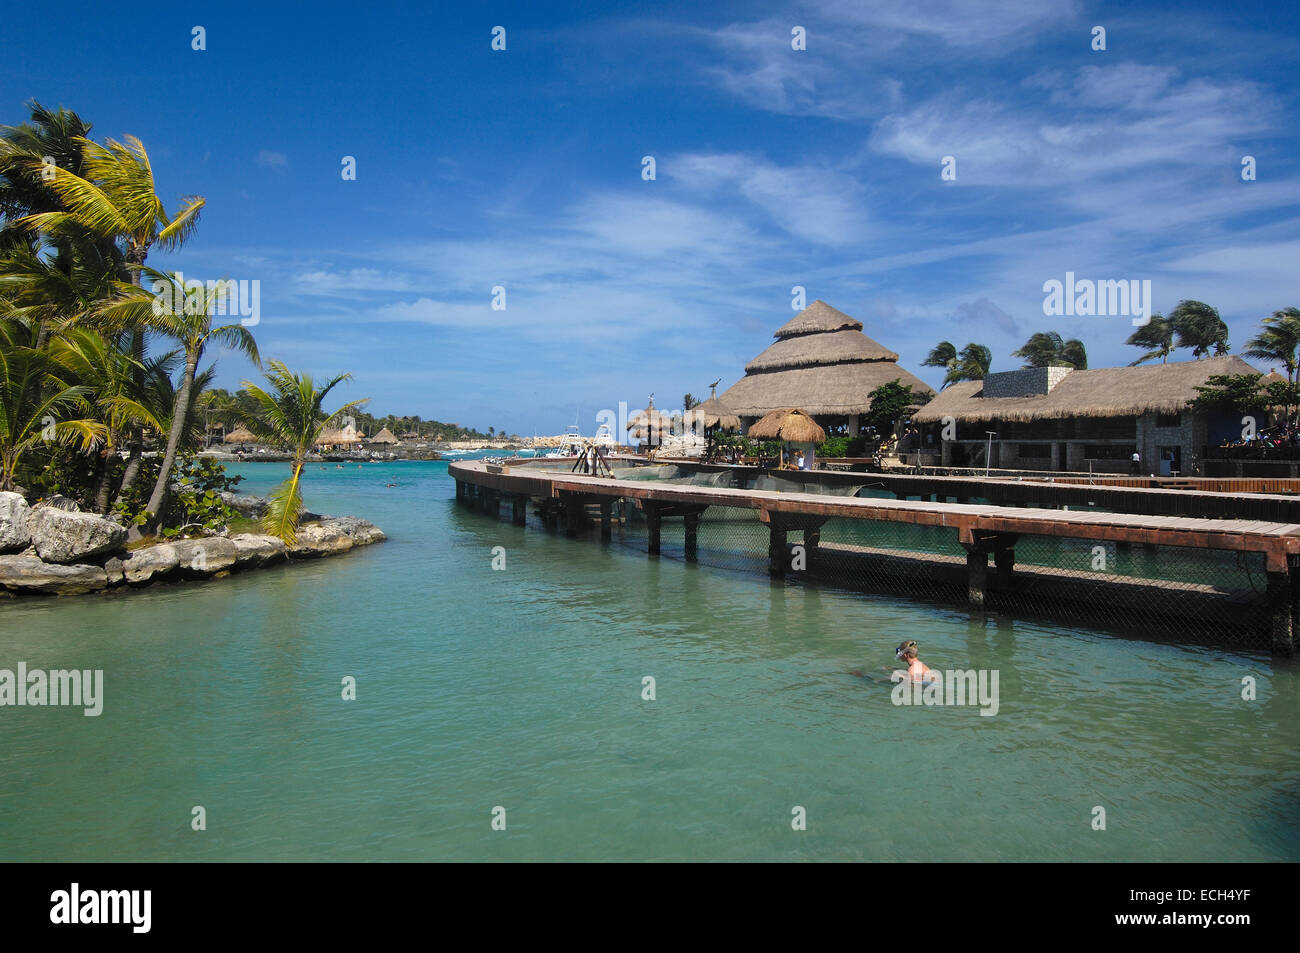 Beach-Bereich, Xcaret, Öko-archäologischen Park, Playa del Carmen Quintana Roo Zustand, Riviera Maya, Halbinsel Yucatan, Mexiko Stockfoto